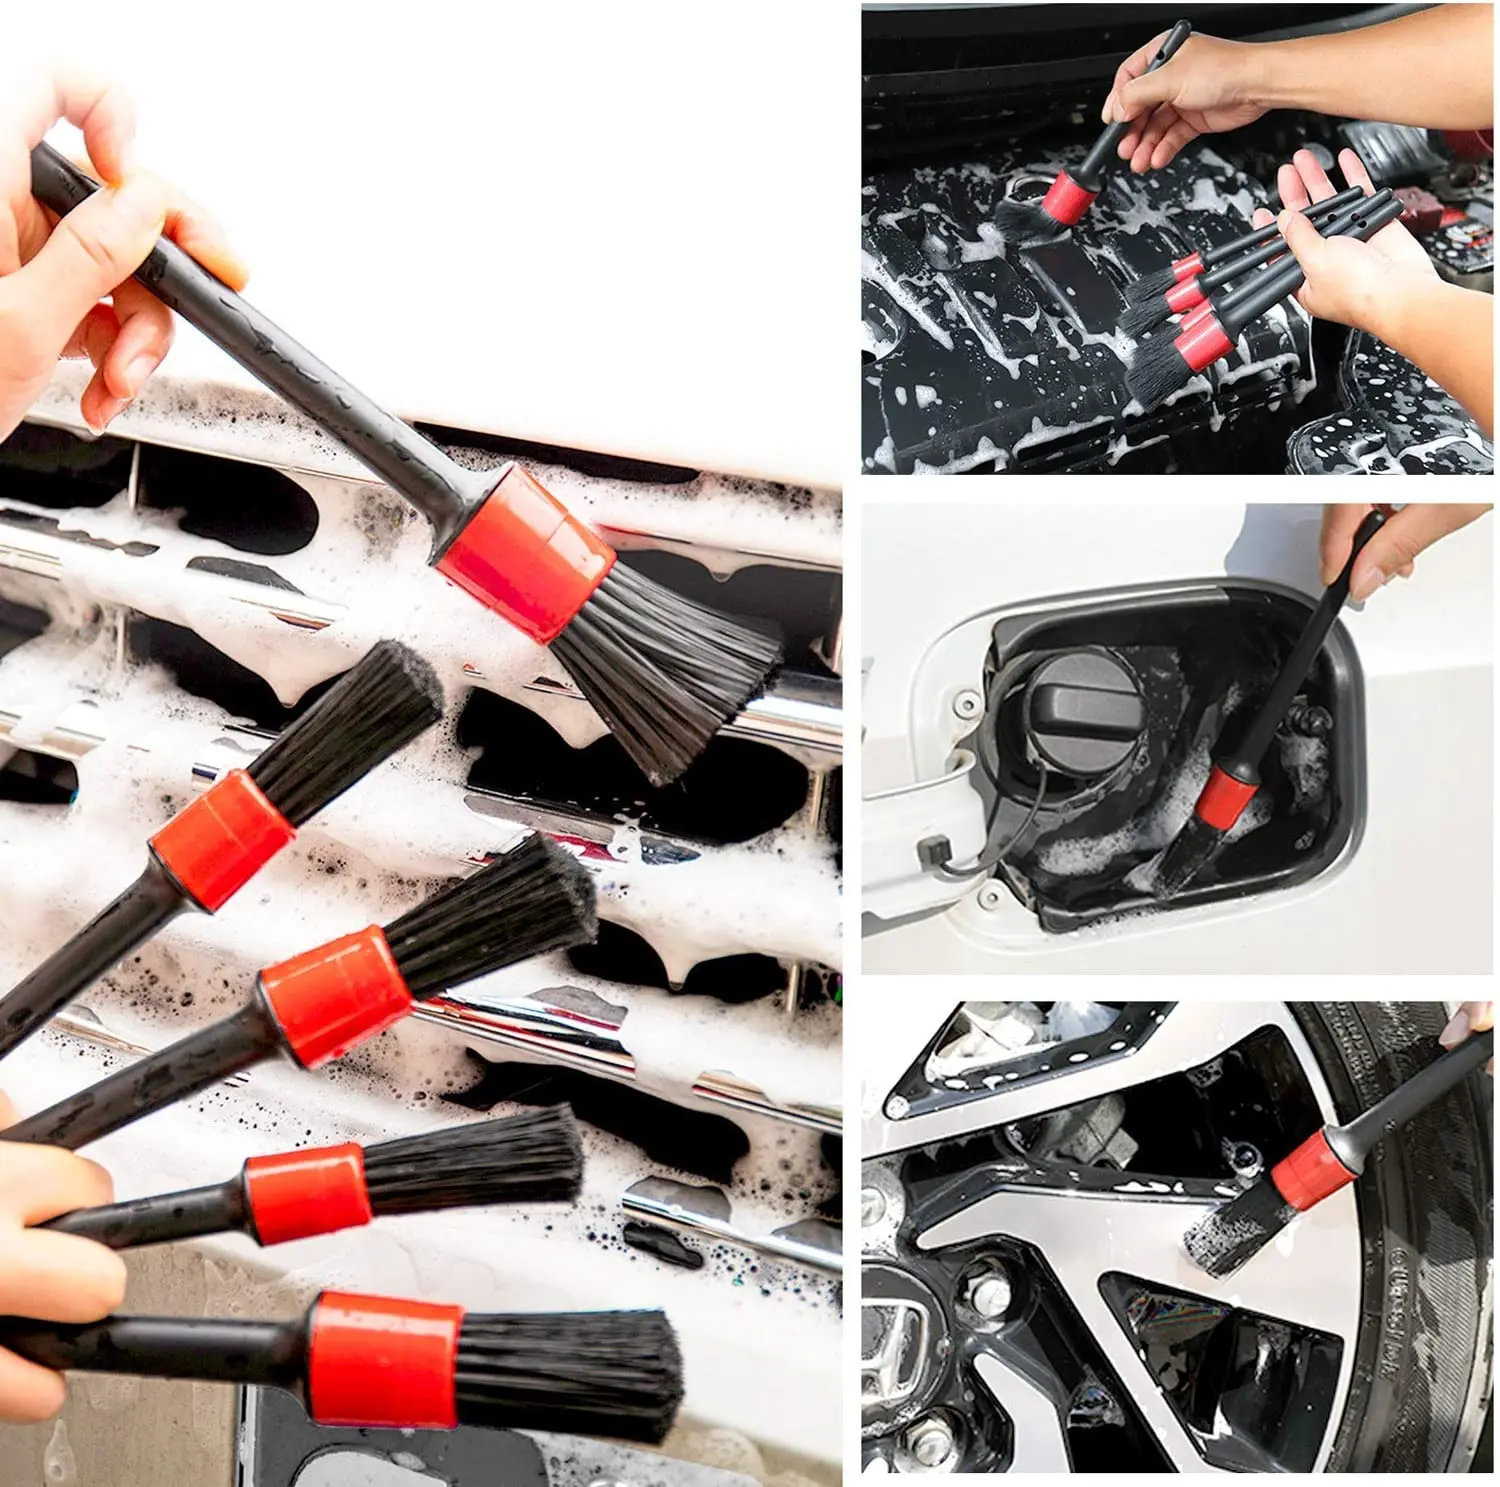 1pcs/5pcs Detailing Brush Set Car Brushes Car Detailing Brush For